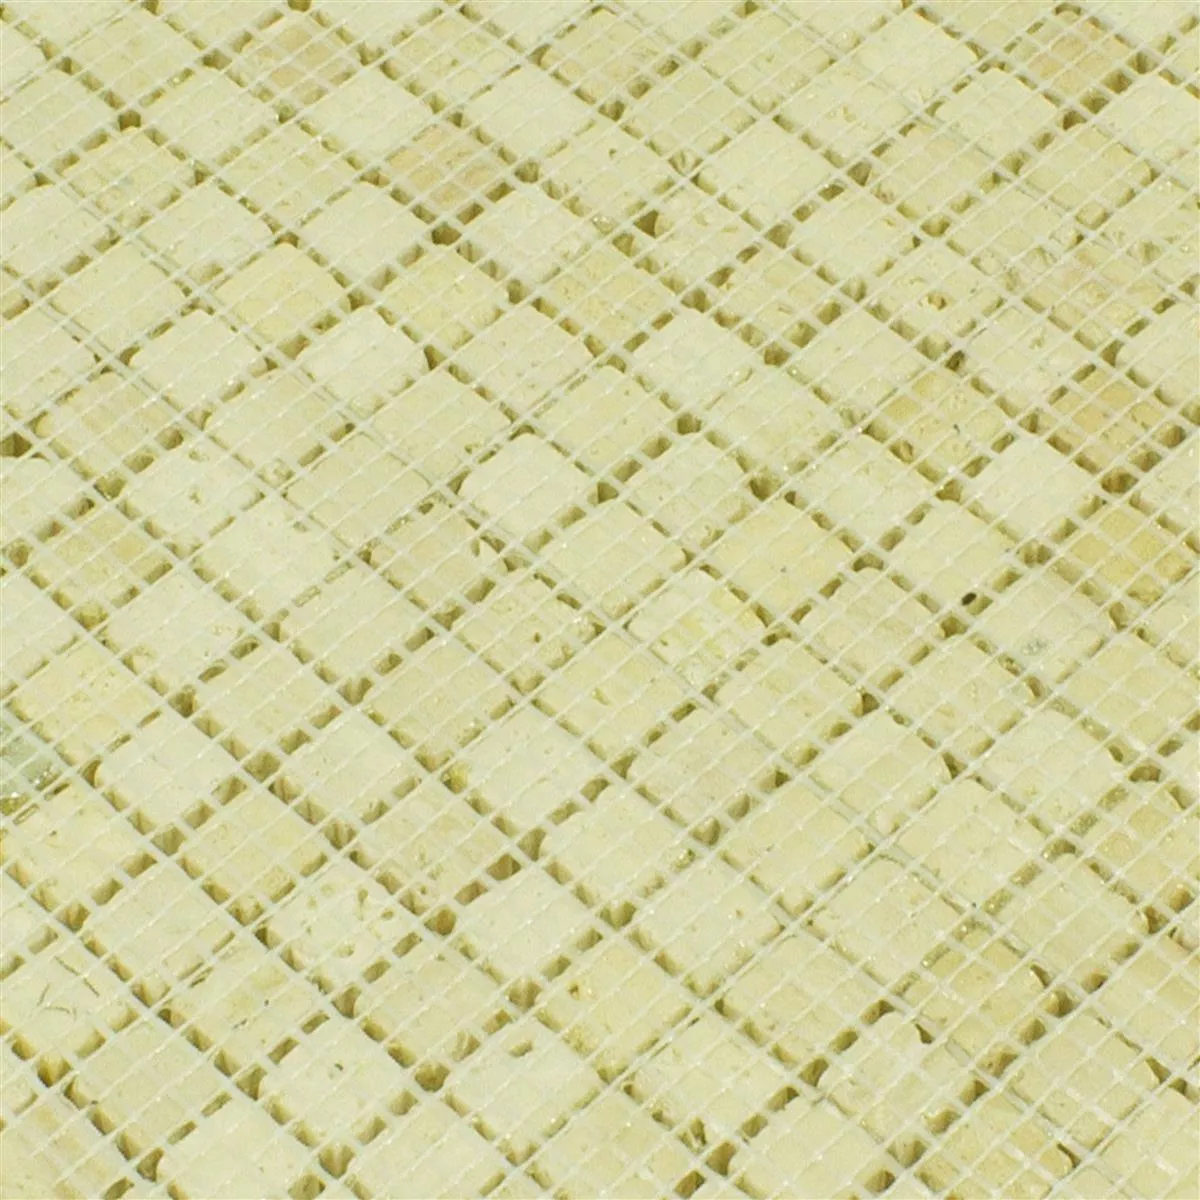 Marble Natural Stone Mosaic Tiles Antika Mix Gold Creme